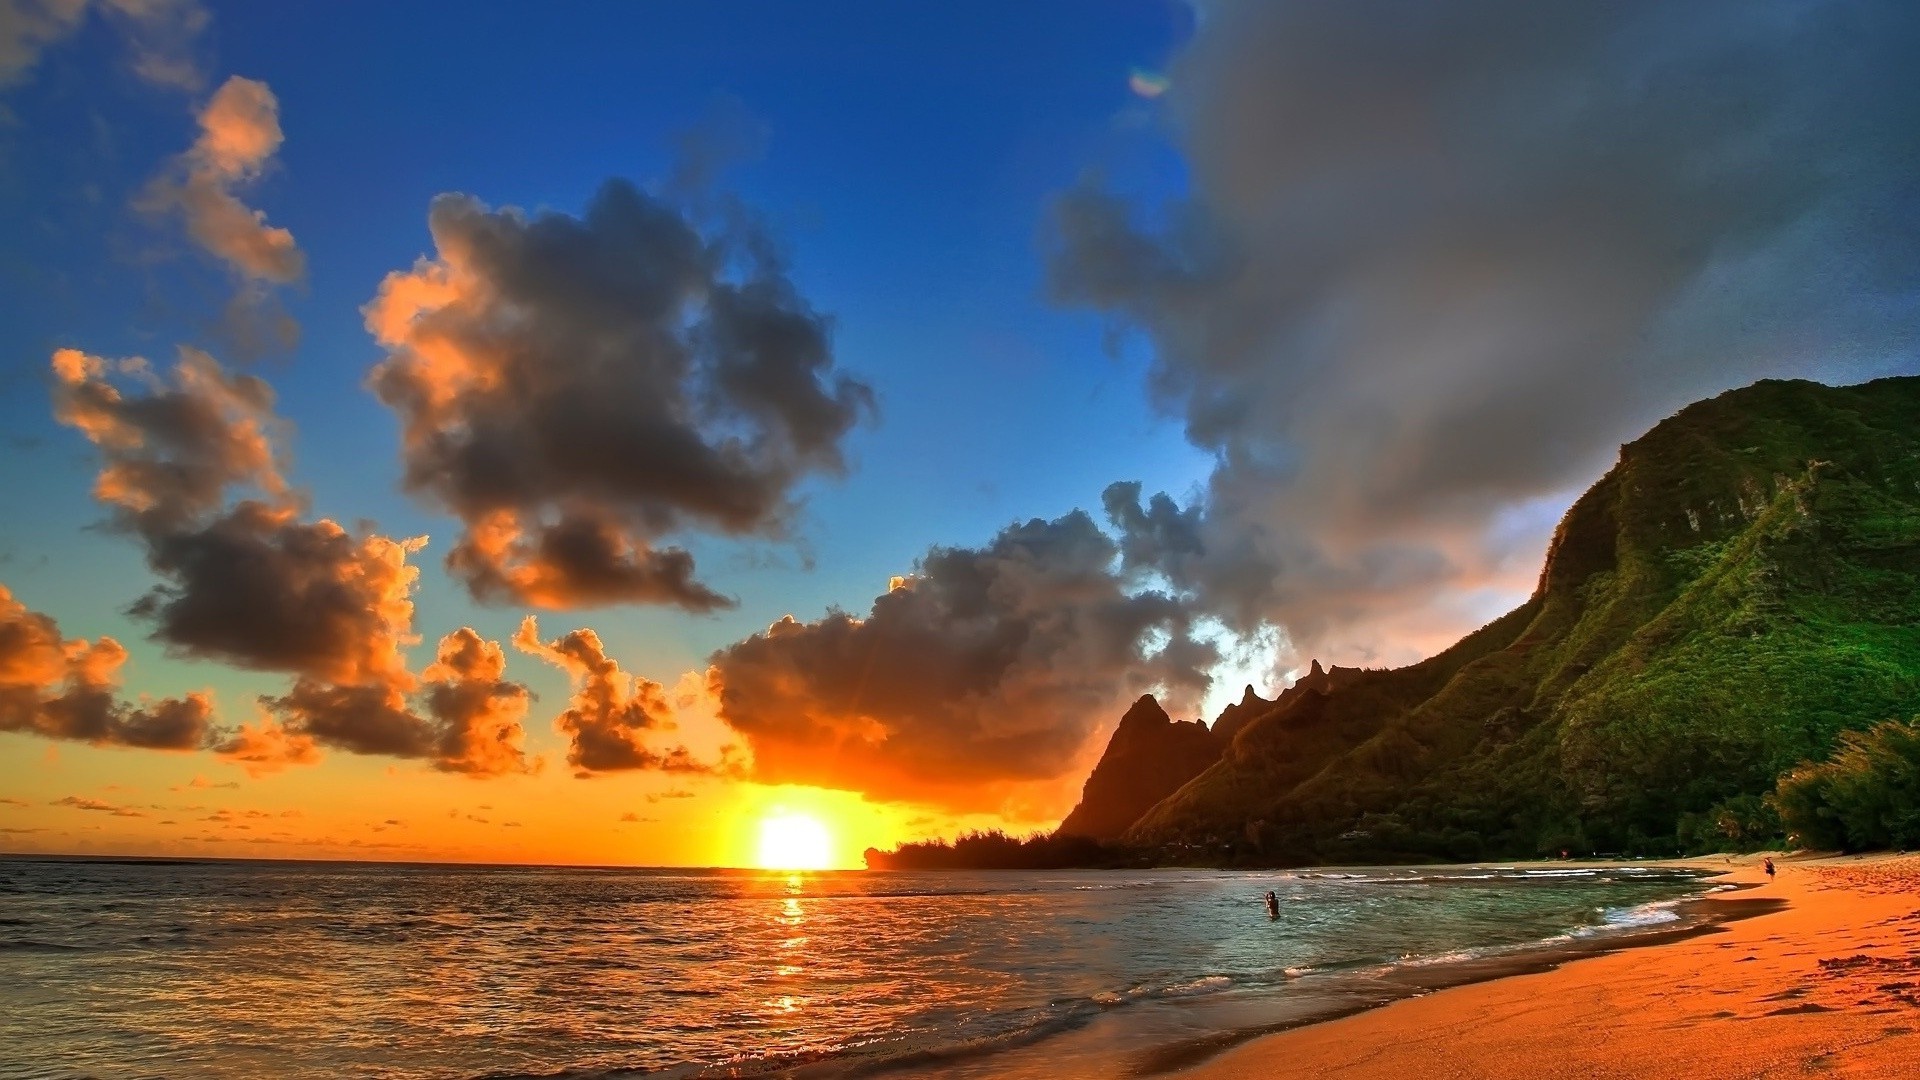 HD Sunset Beaches Background